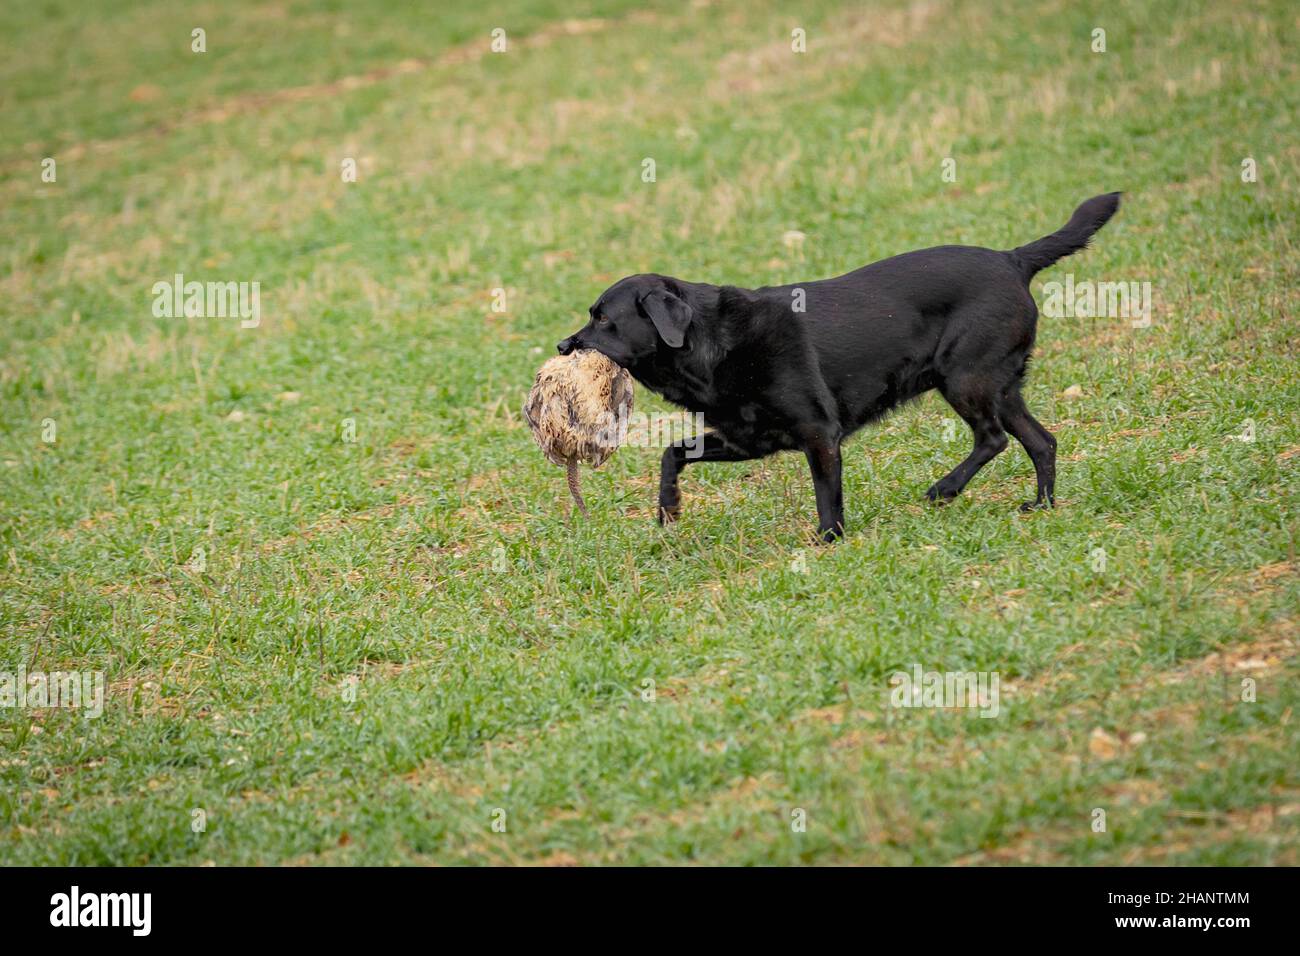 Black labrador dog retrieving shot pheasant on game shoot. Stock Photo